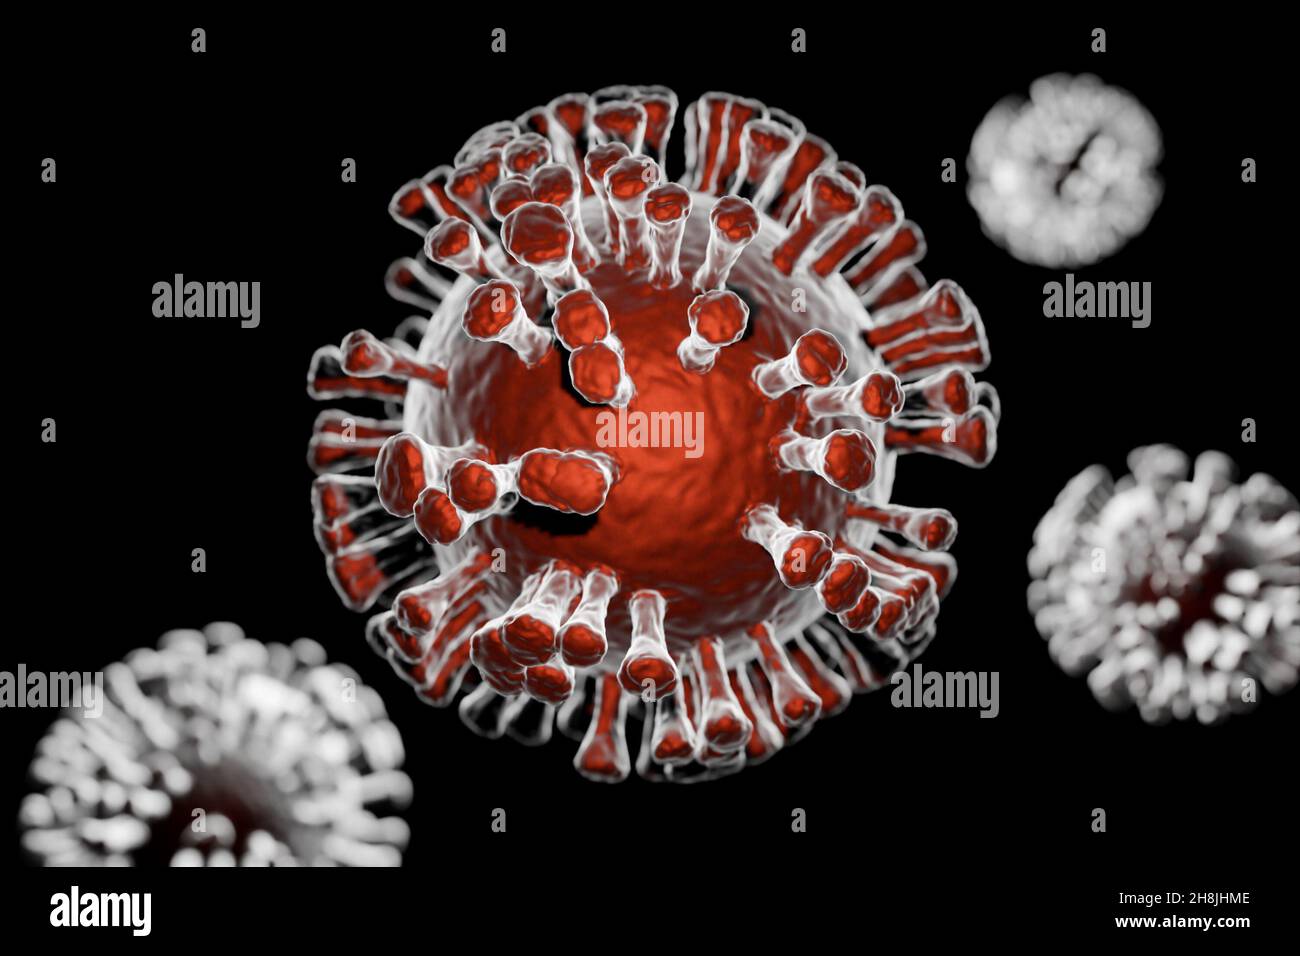 Illustration of Covid-19 Coronavirus cells, visualization of sars-cov-2 model on black background Stock Photo